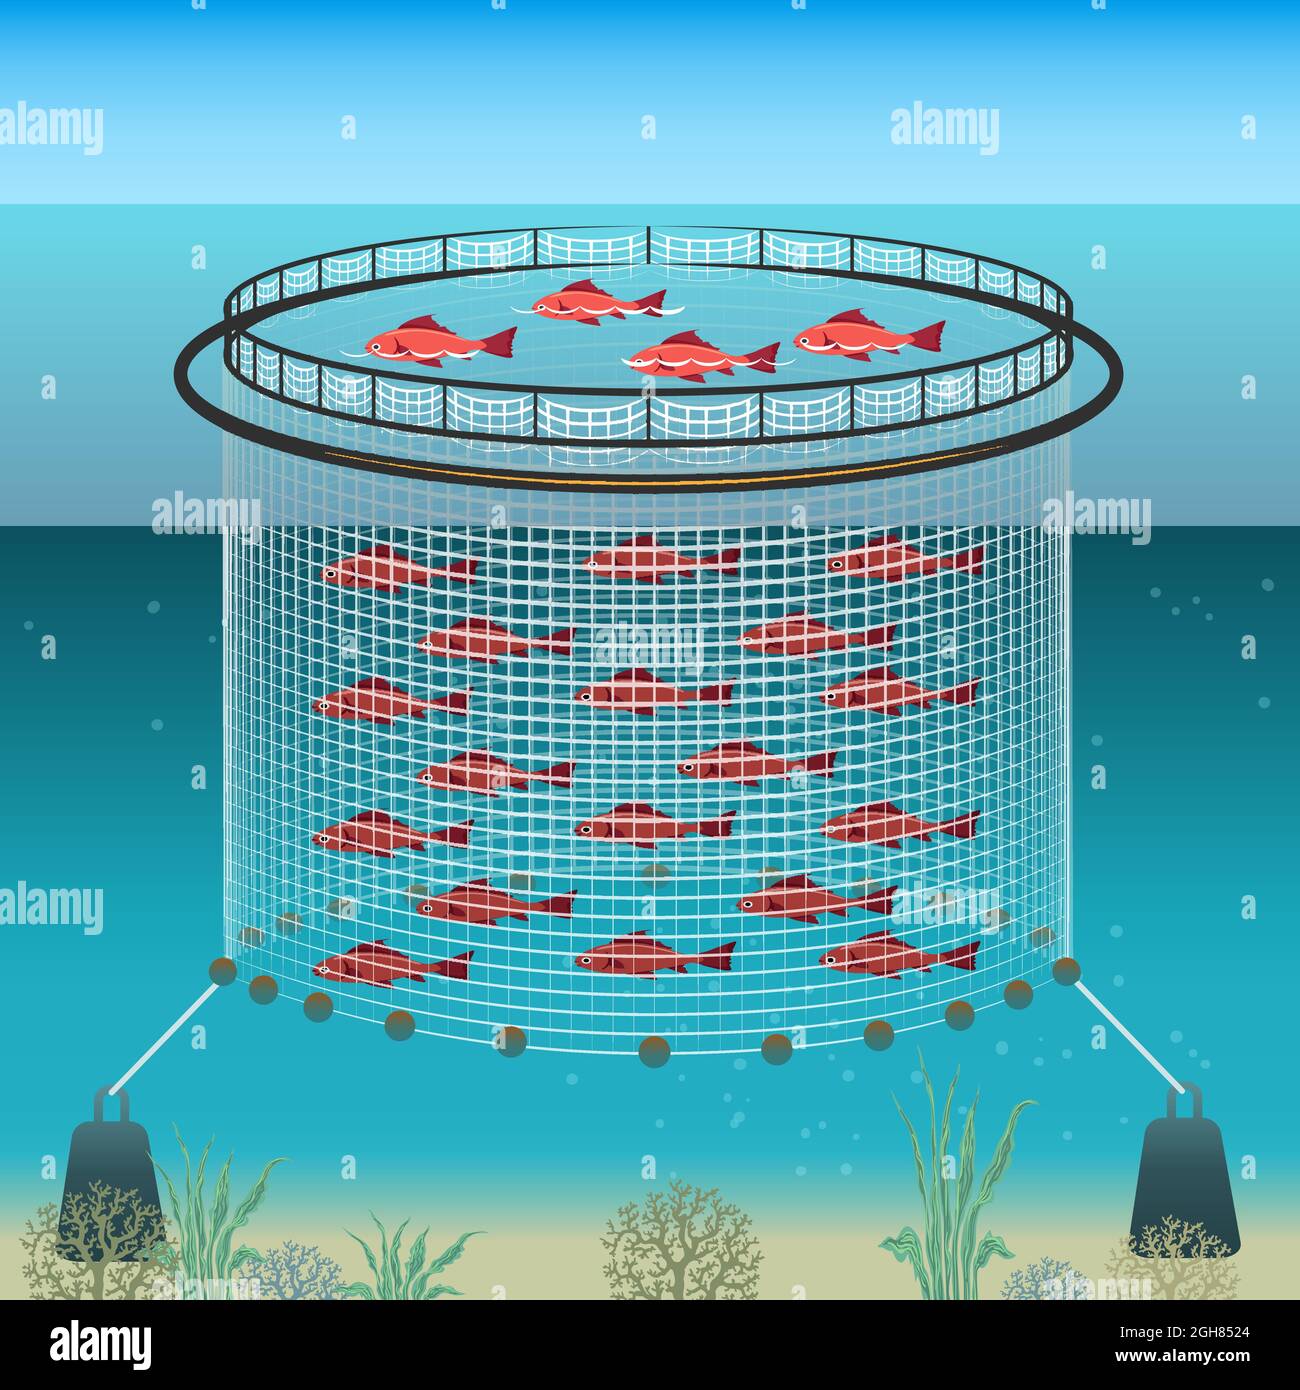 Aquaculture cage fish farming net Stock Vector Images - Alamy